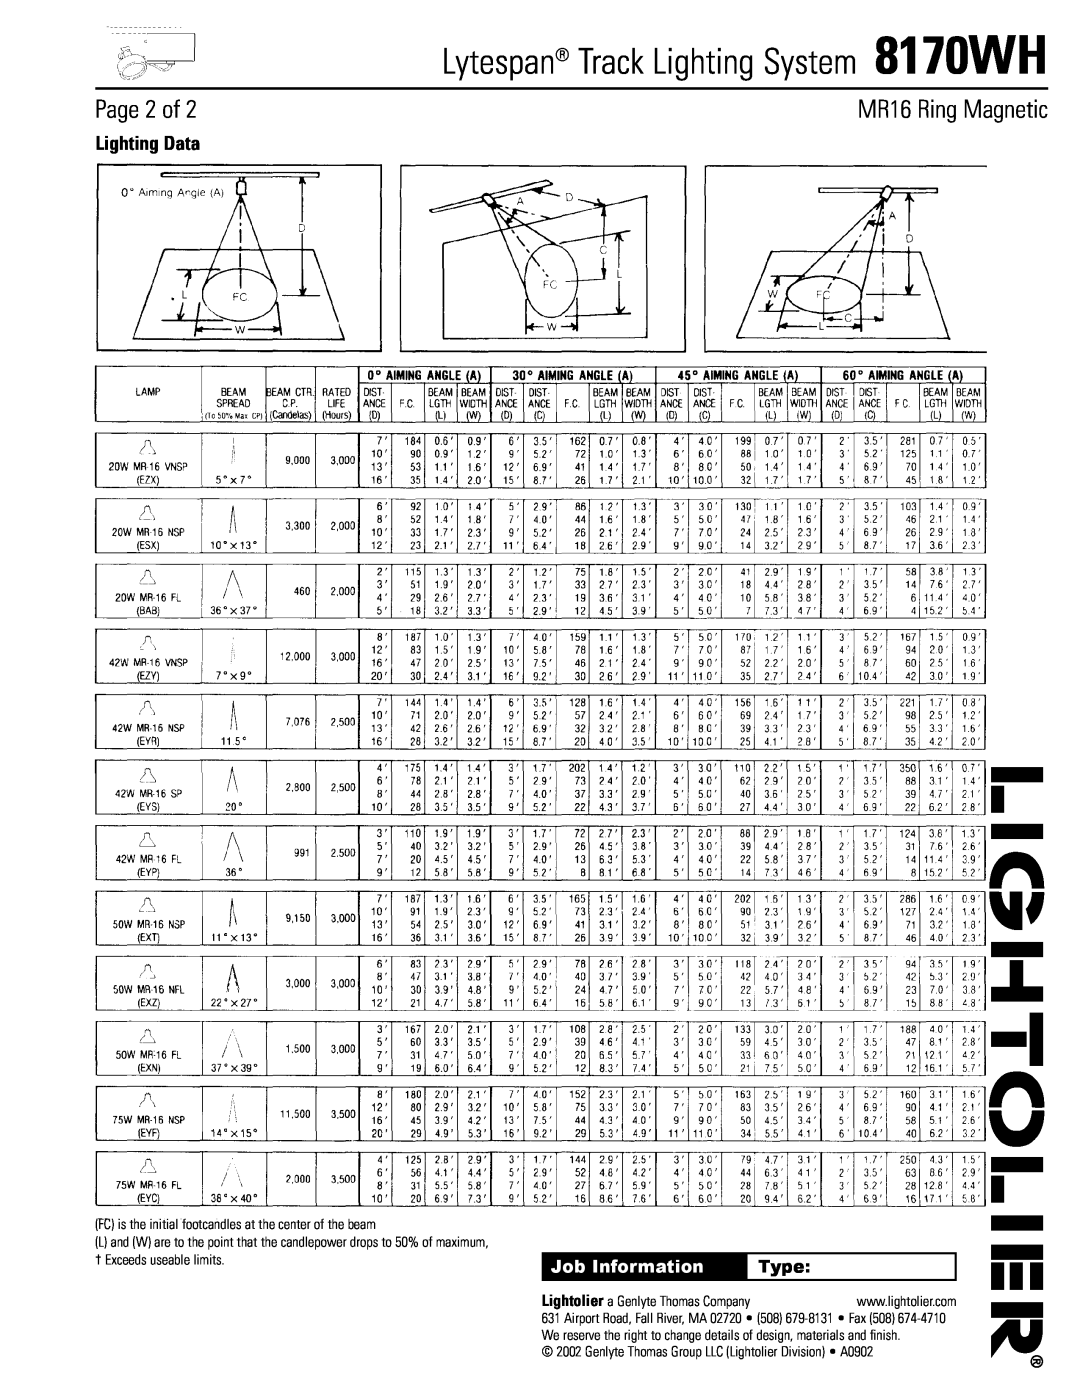 Lightolier Page 2 of, MR16 Ring Magnetic, Lighting Data, Type, Lytespan Track Lighting System 8170WH, Job Information 